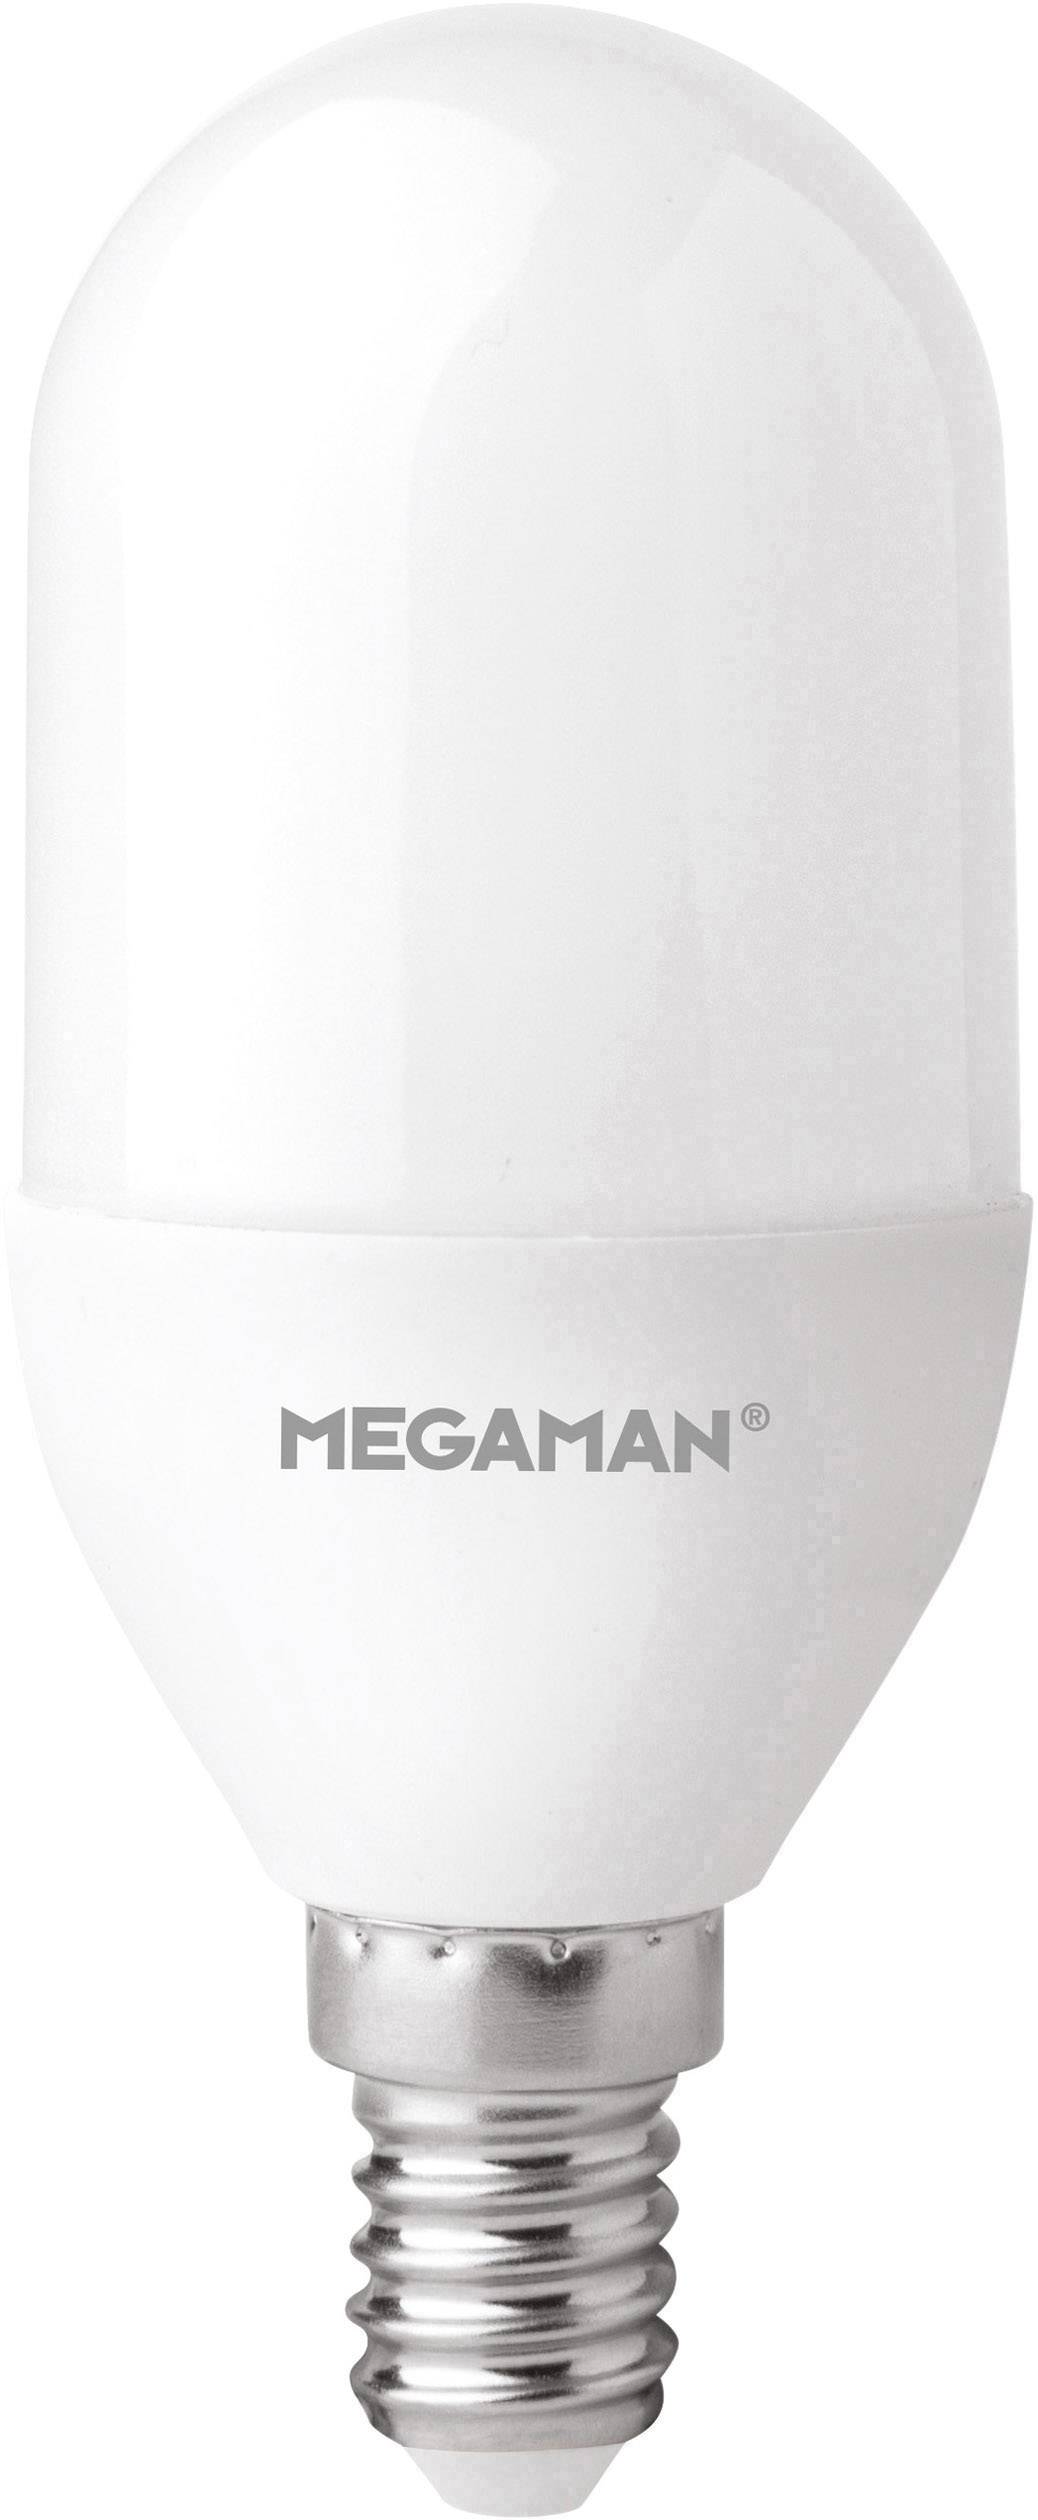 MEGAMAN MEGAM LED Liliput T40 6,5W/828 MM21134 E14 810lm 15000h A++,7kWh/1000